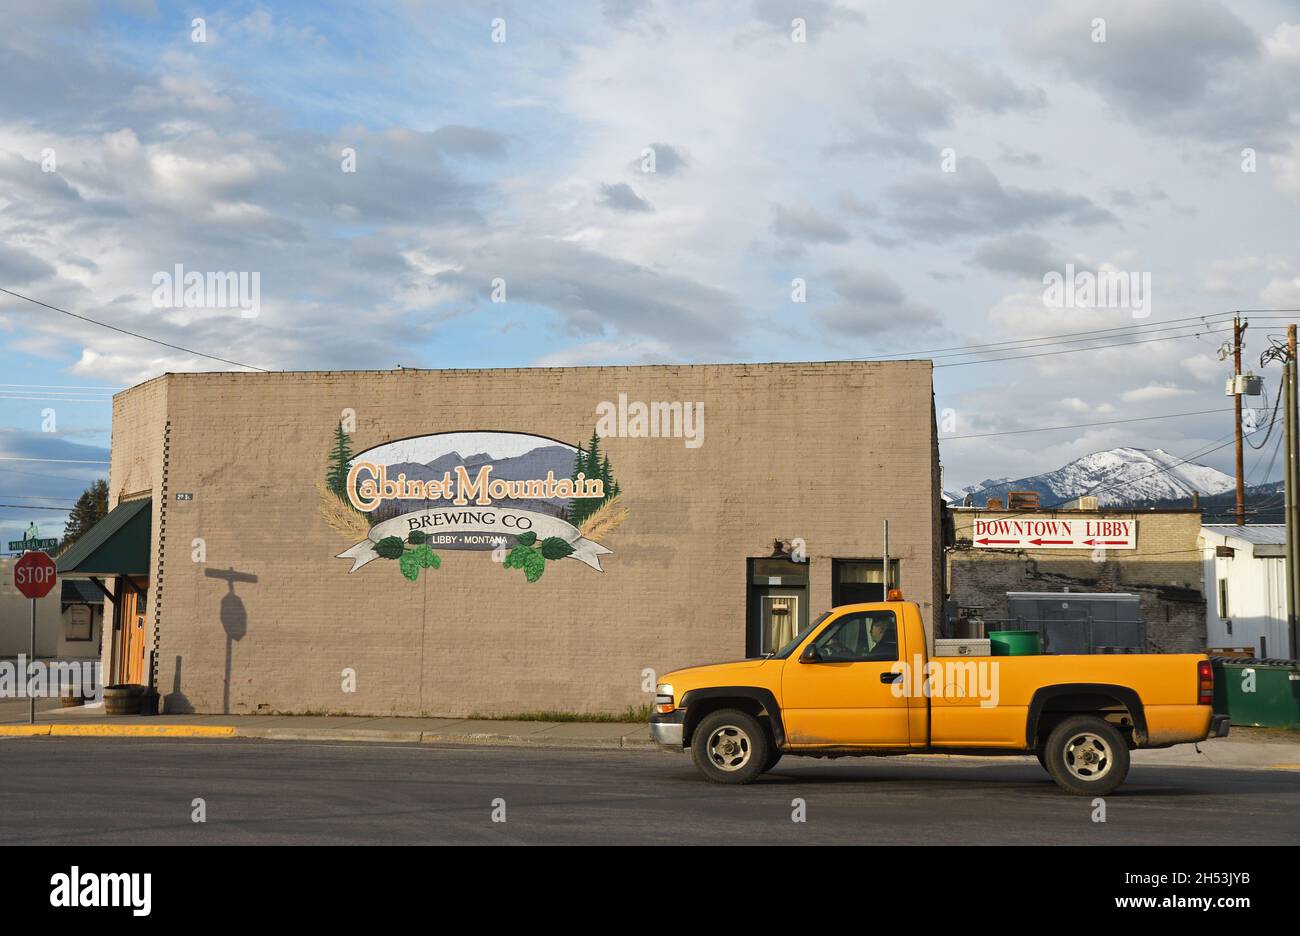 Cabinet Mountain Brewing Company in Libby, Montana. (Photo by Randy Beacham) Stock Photo